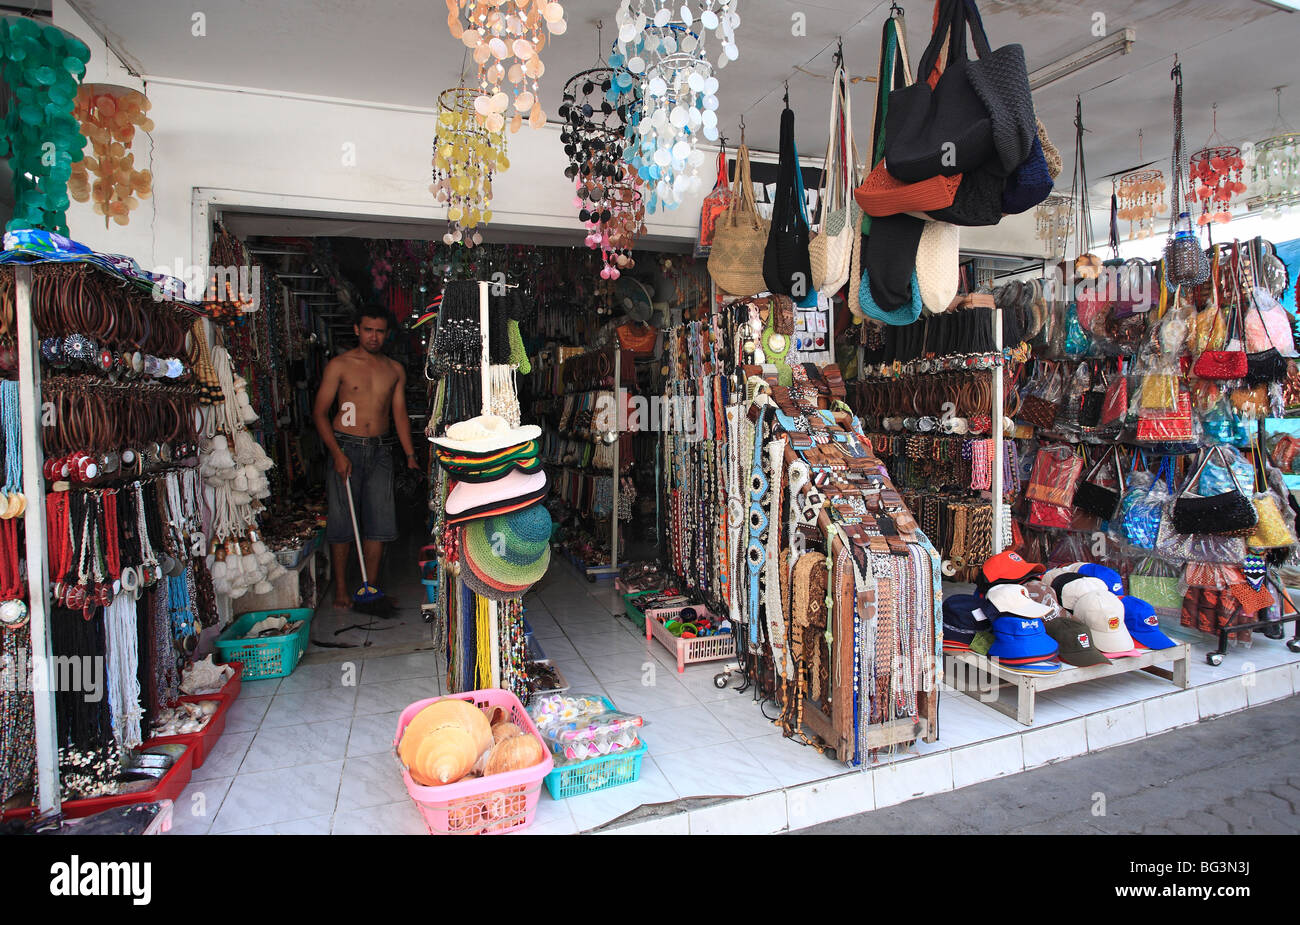 shop selling jewellery, bags and assorted goods, Jalan Sahadewa Street, also known as Garlic Lane, Legian, Kuta, Bali, Indonesia Stock Photo